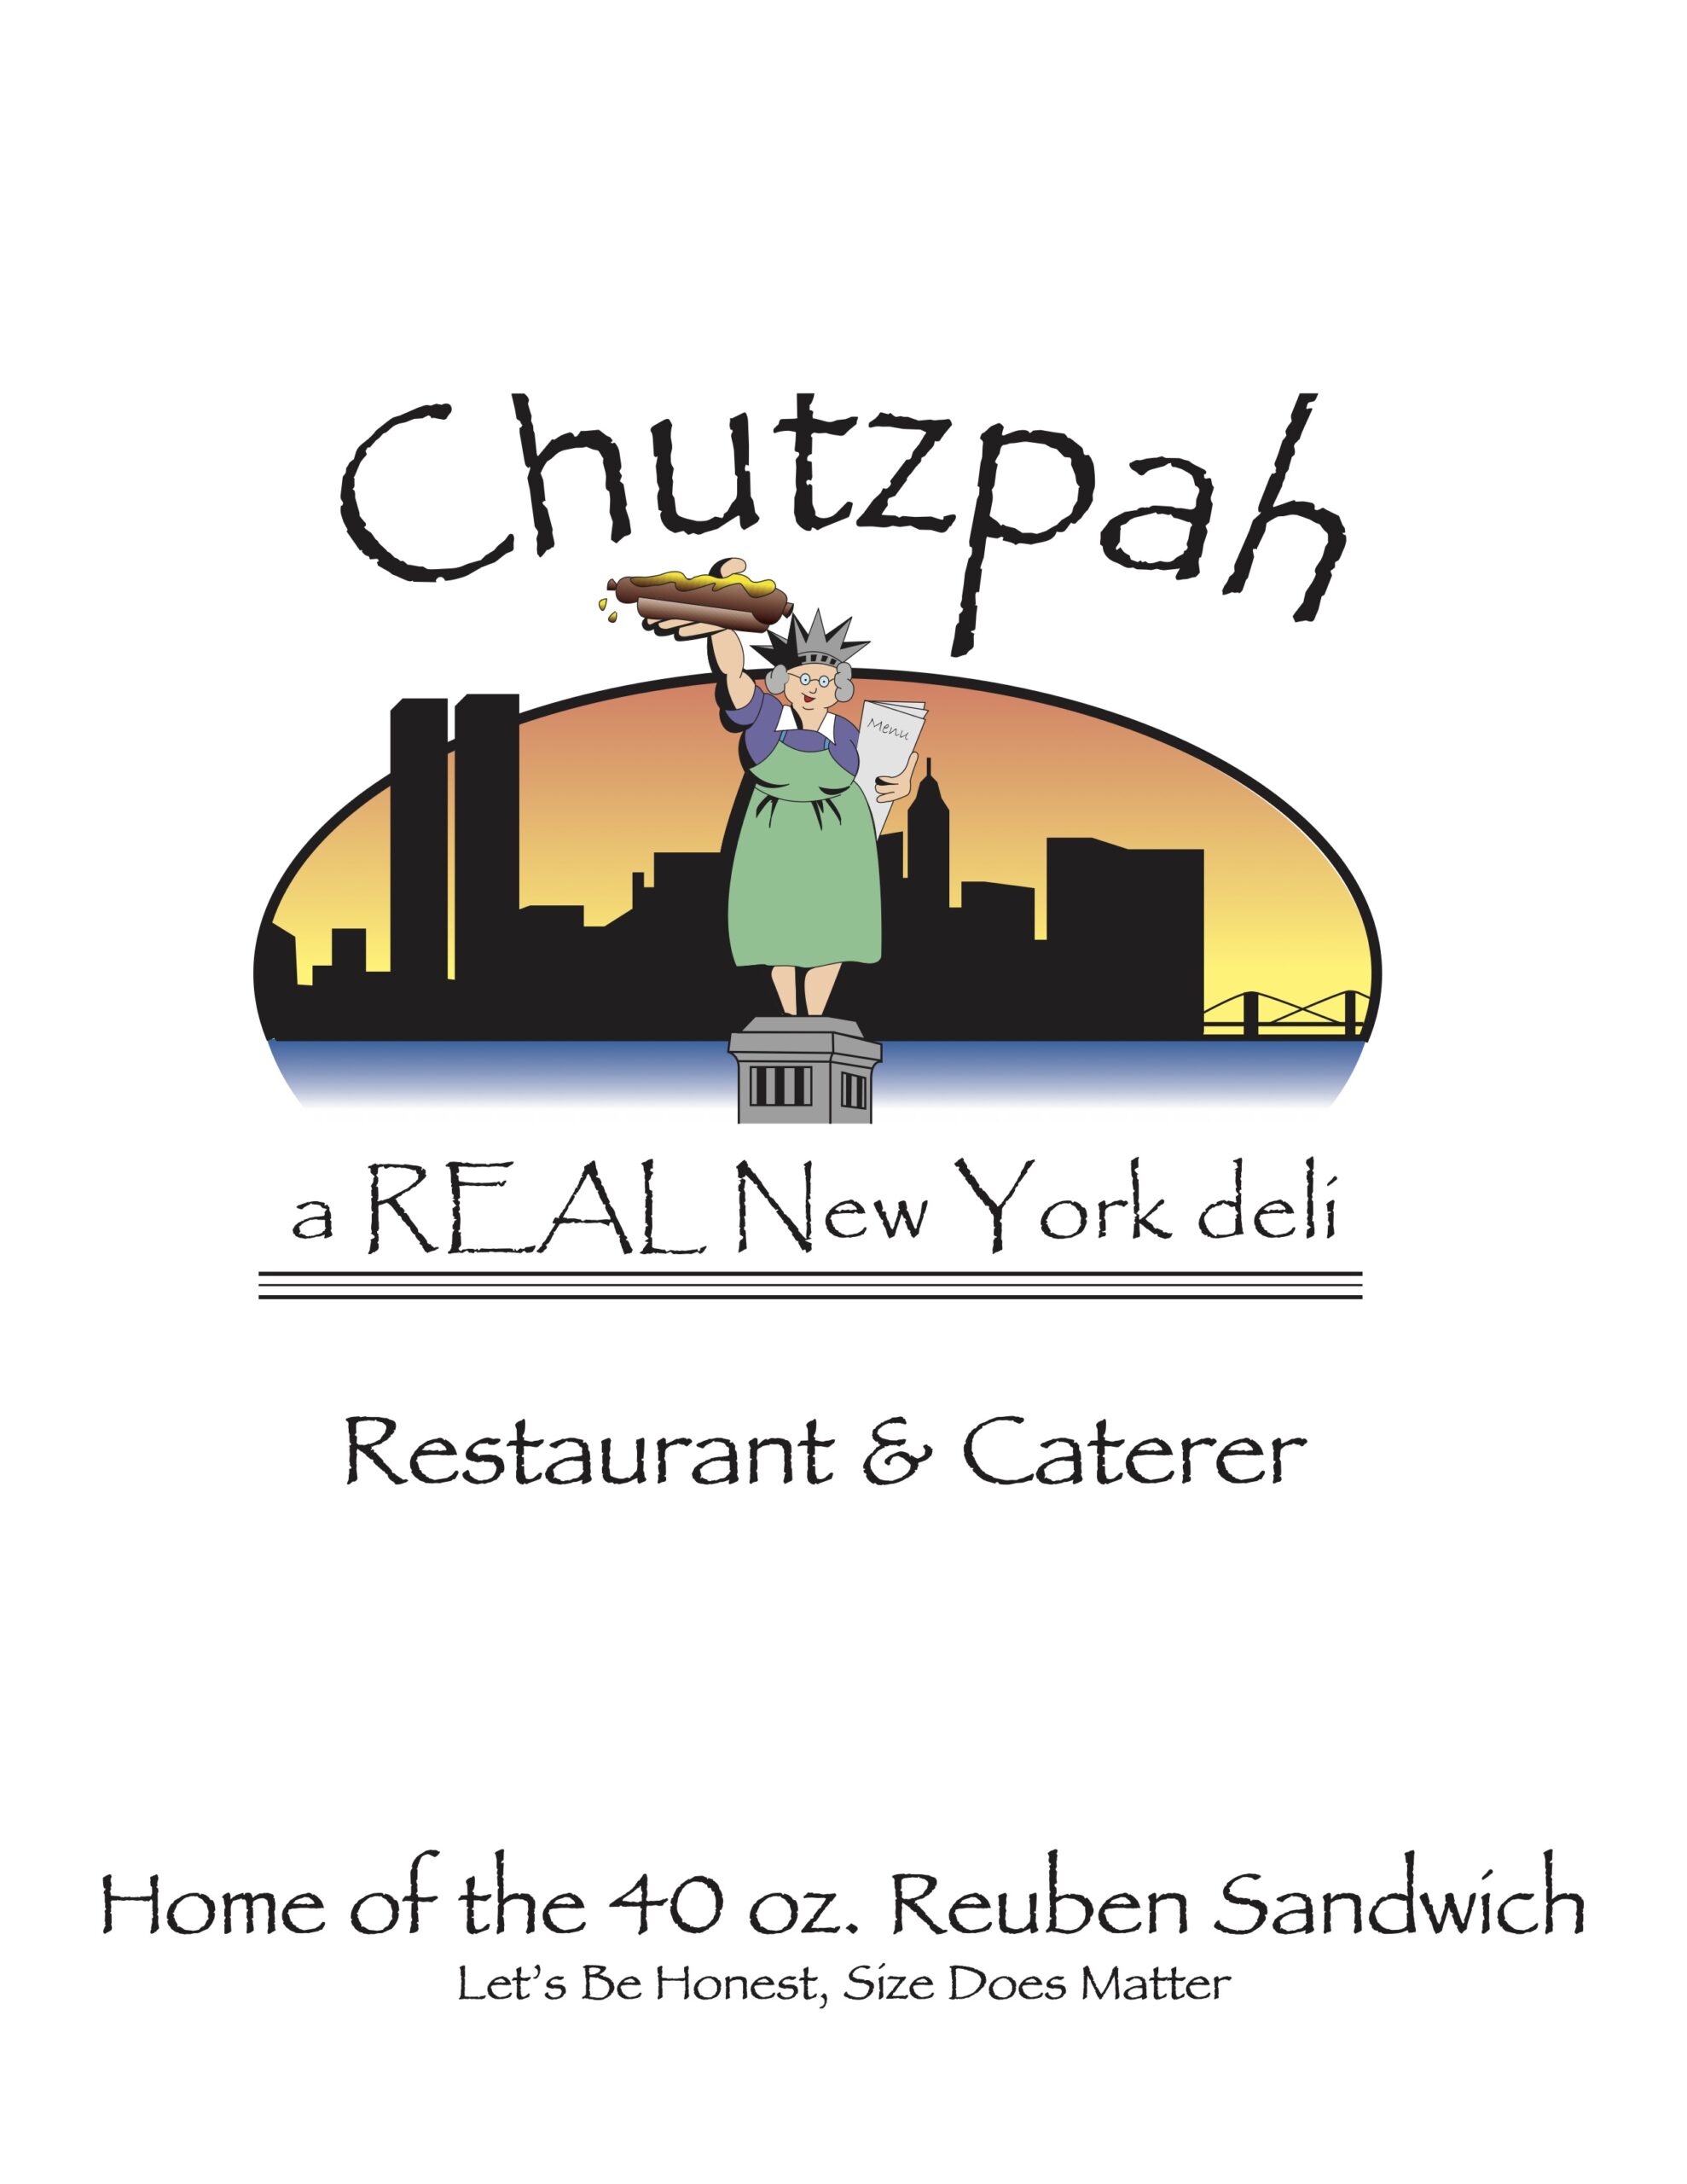 Chutzpah - A Real New York Deli